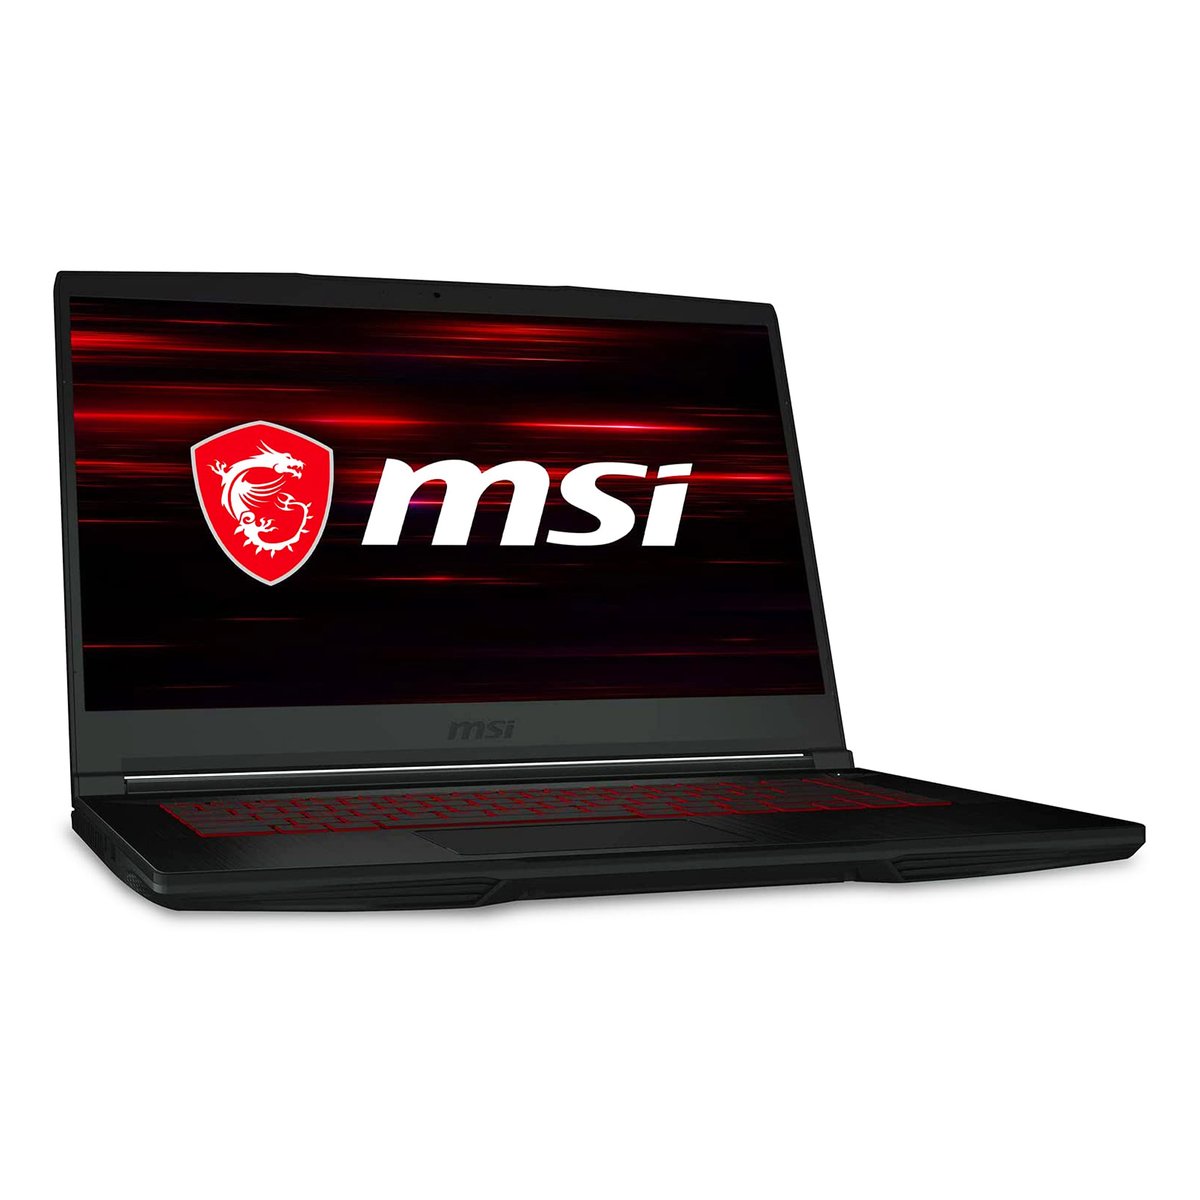 MSI Gaming Laptop NB 9S7-16R612-054 - 15.6” FHD Display, 11th Gen Intel  Core i5 -11400H, 512GB SSD, 8GB RAM, NVIDIA GeForce RTX 3050 Graphics, Black